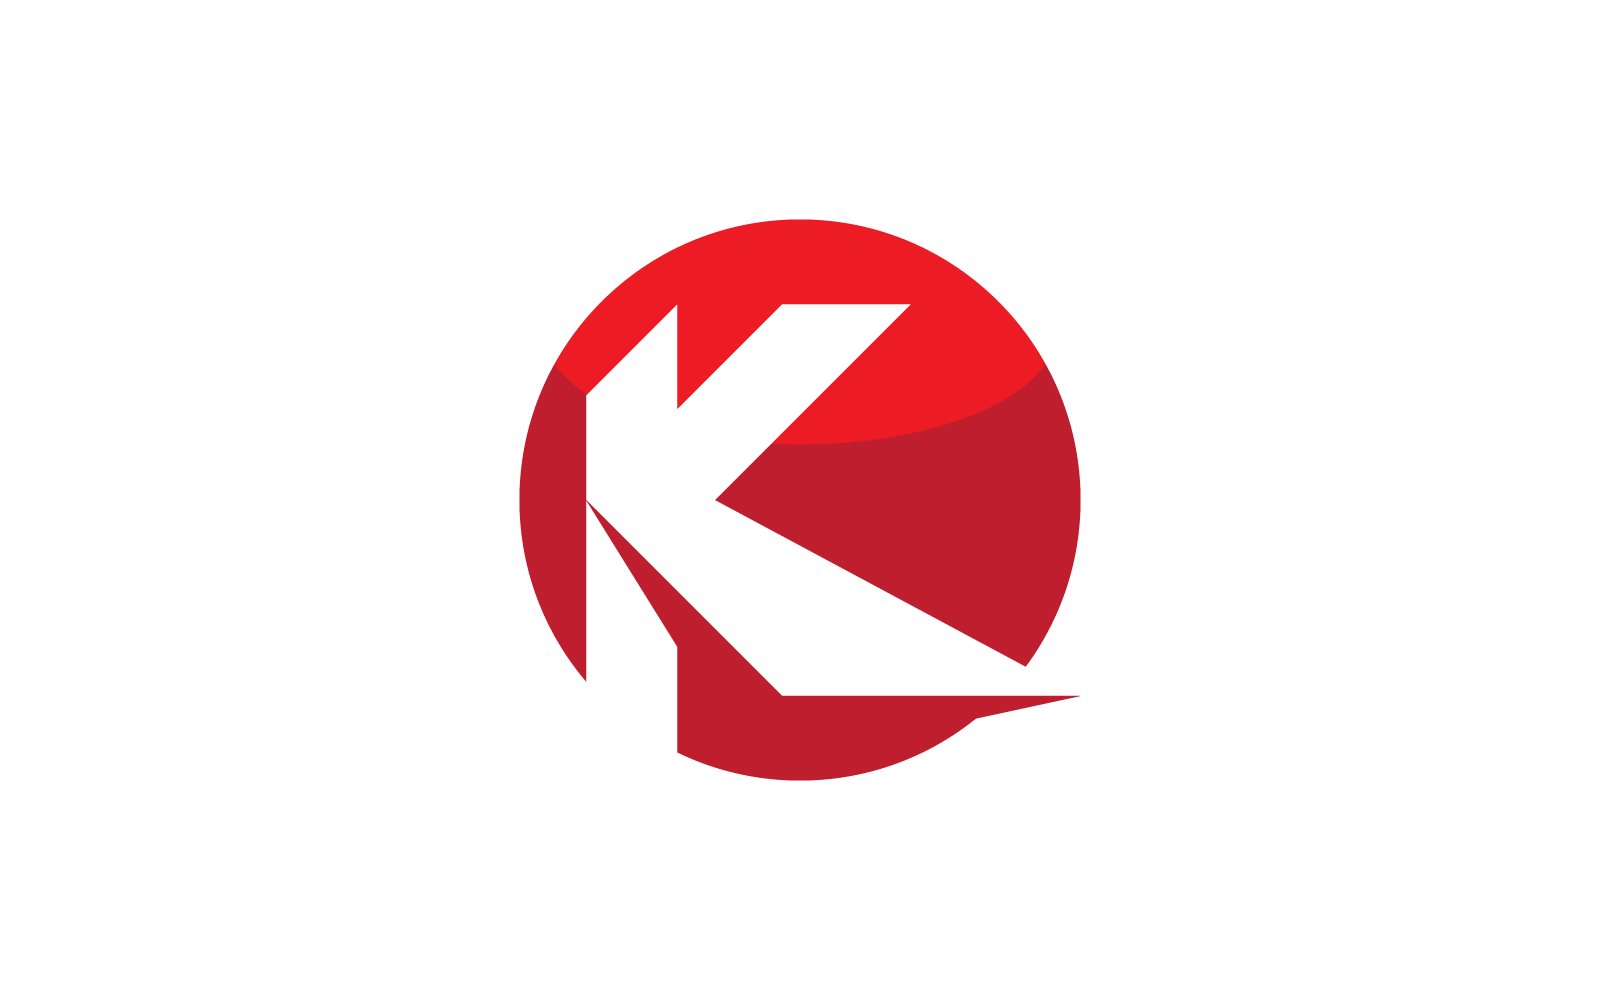 K initial letter logo vector illustration flat design